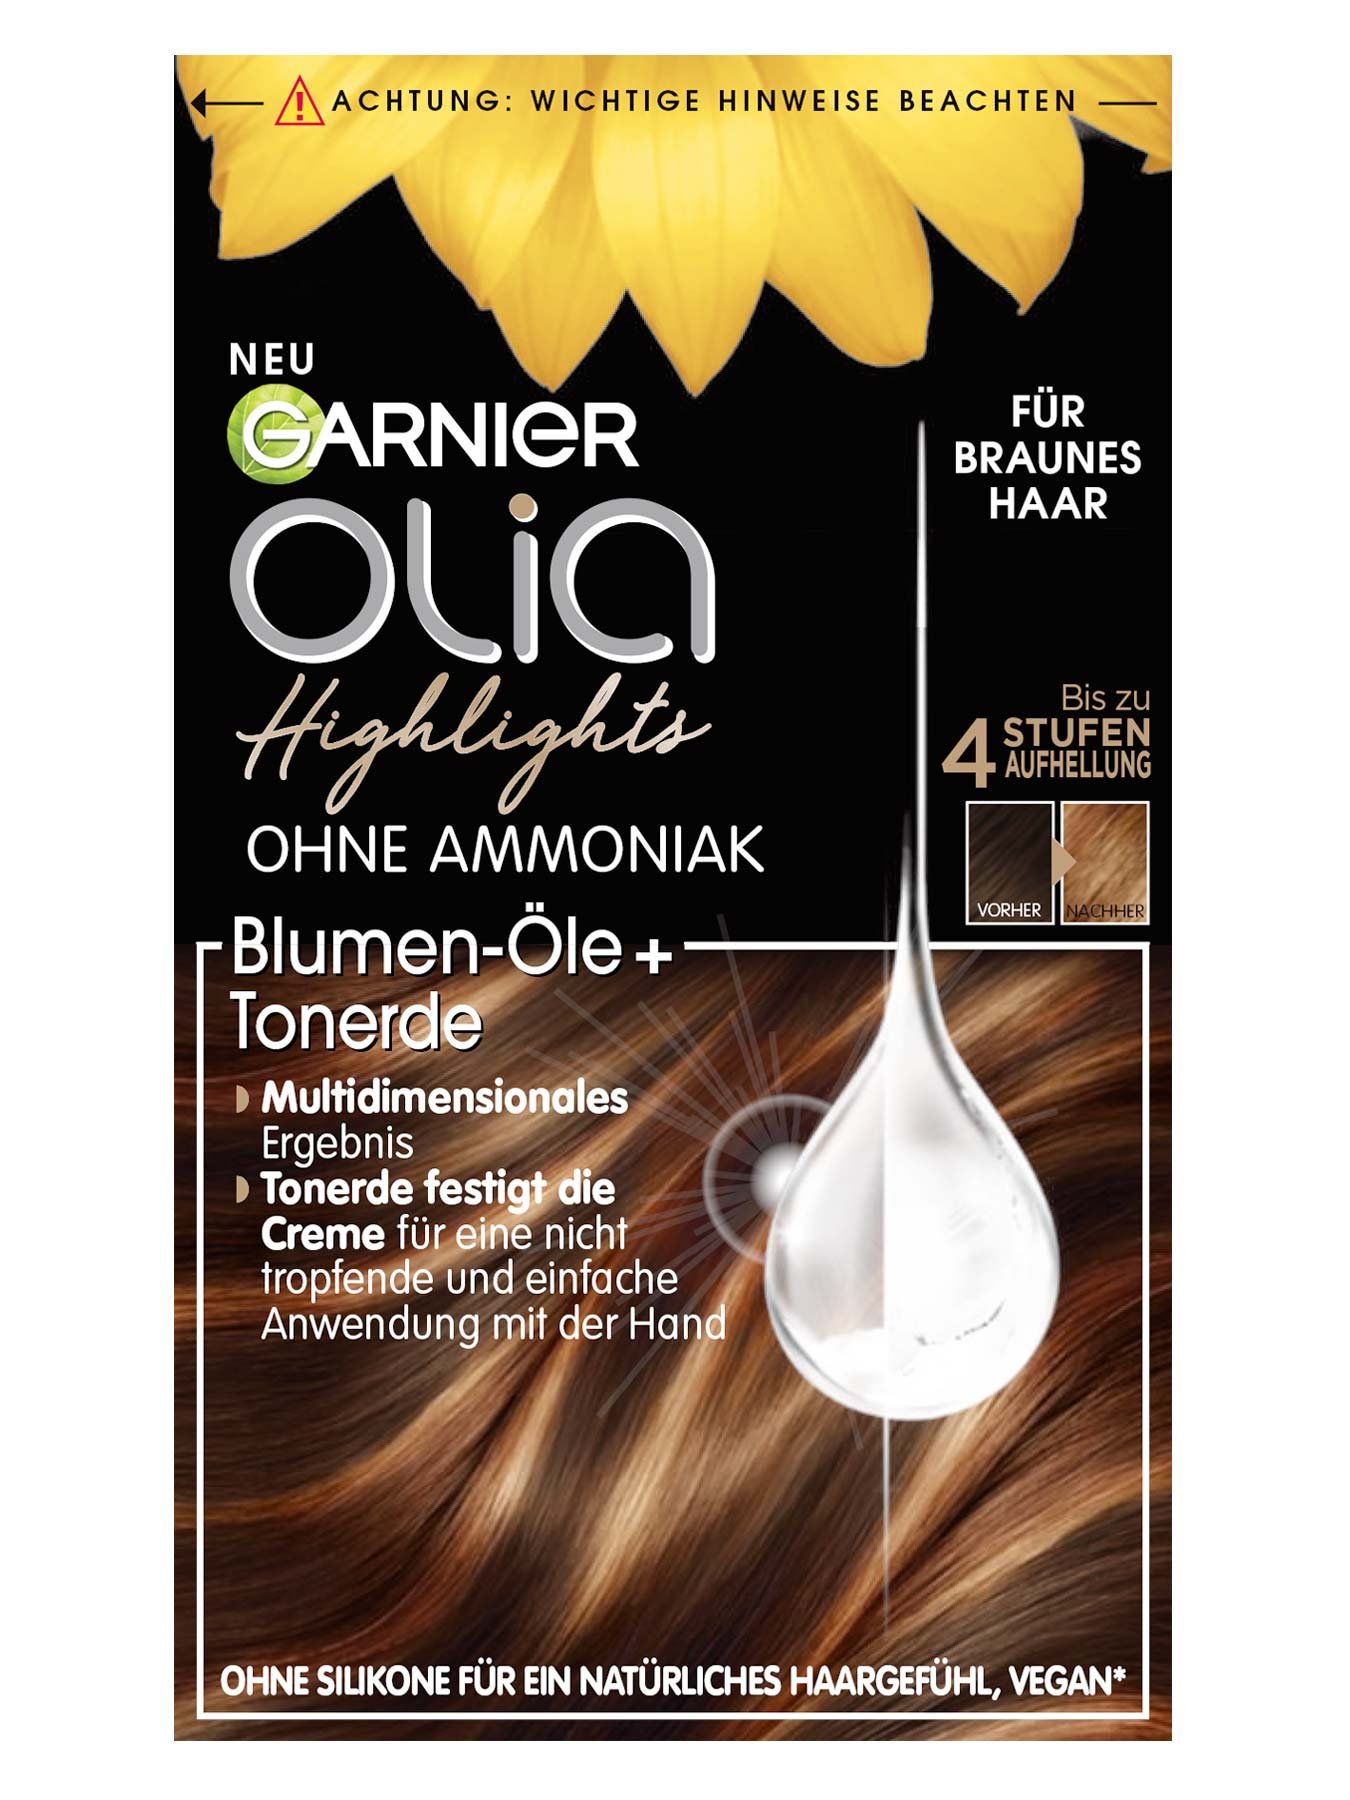 Garnier Olia Highlights für braunes Haar - Produktabbildung